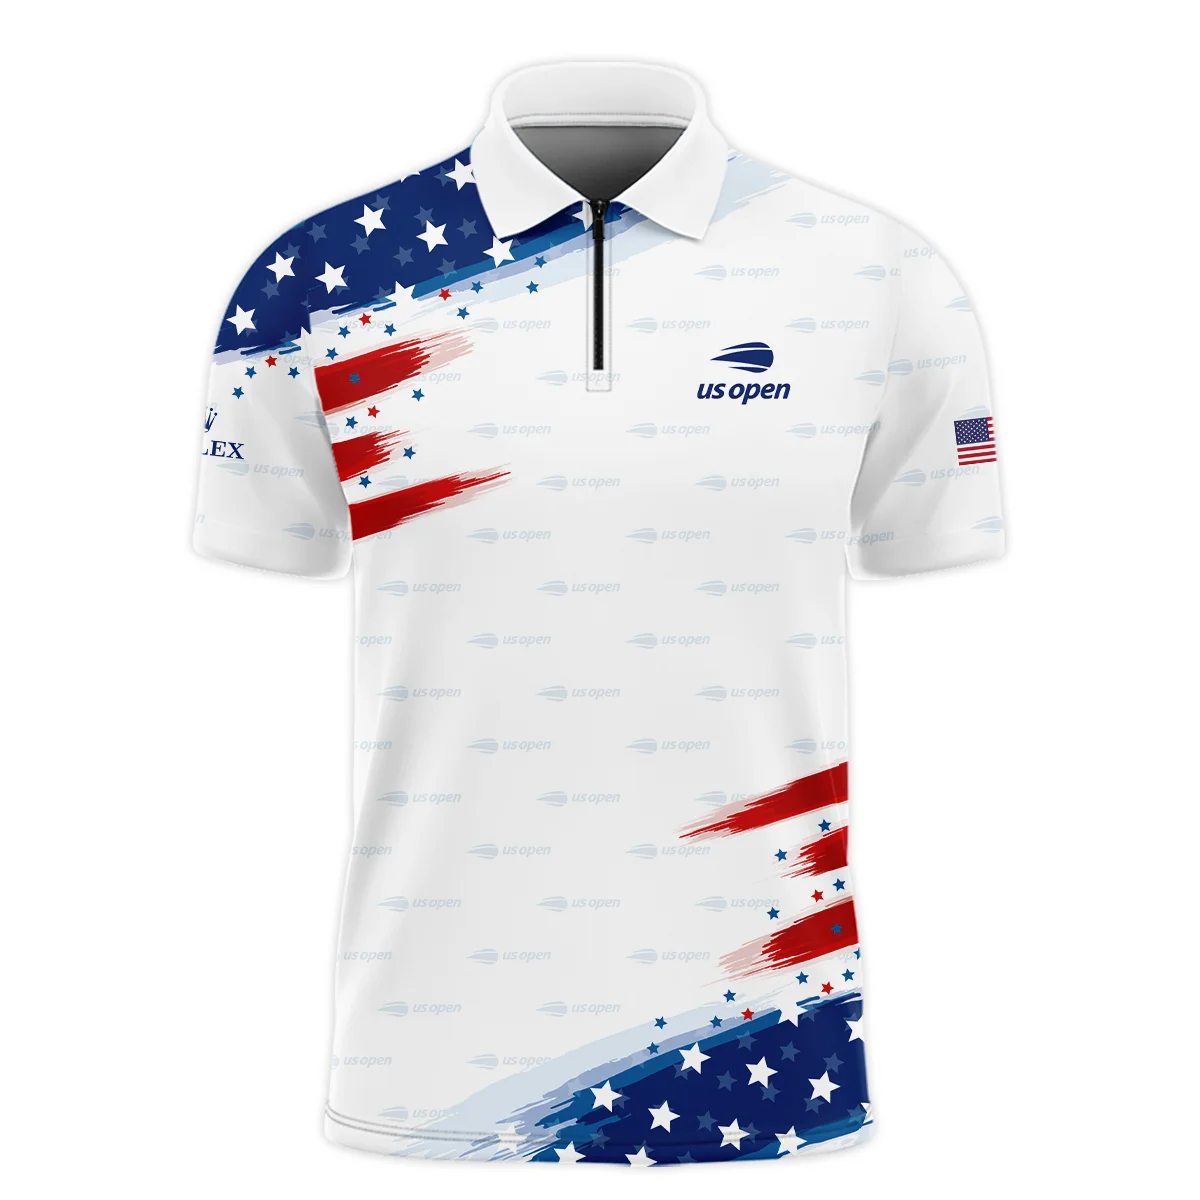 Tennis Love Sport Mix Color US Open Tennis Champions Rolex Zipper Polo Shirt Style Classic Zipper Polo Shirt For Men